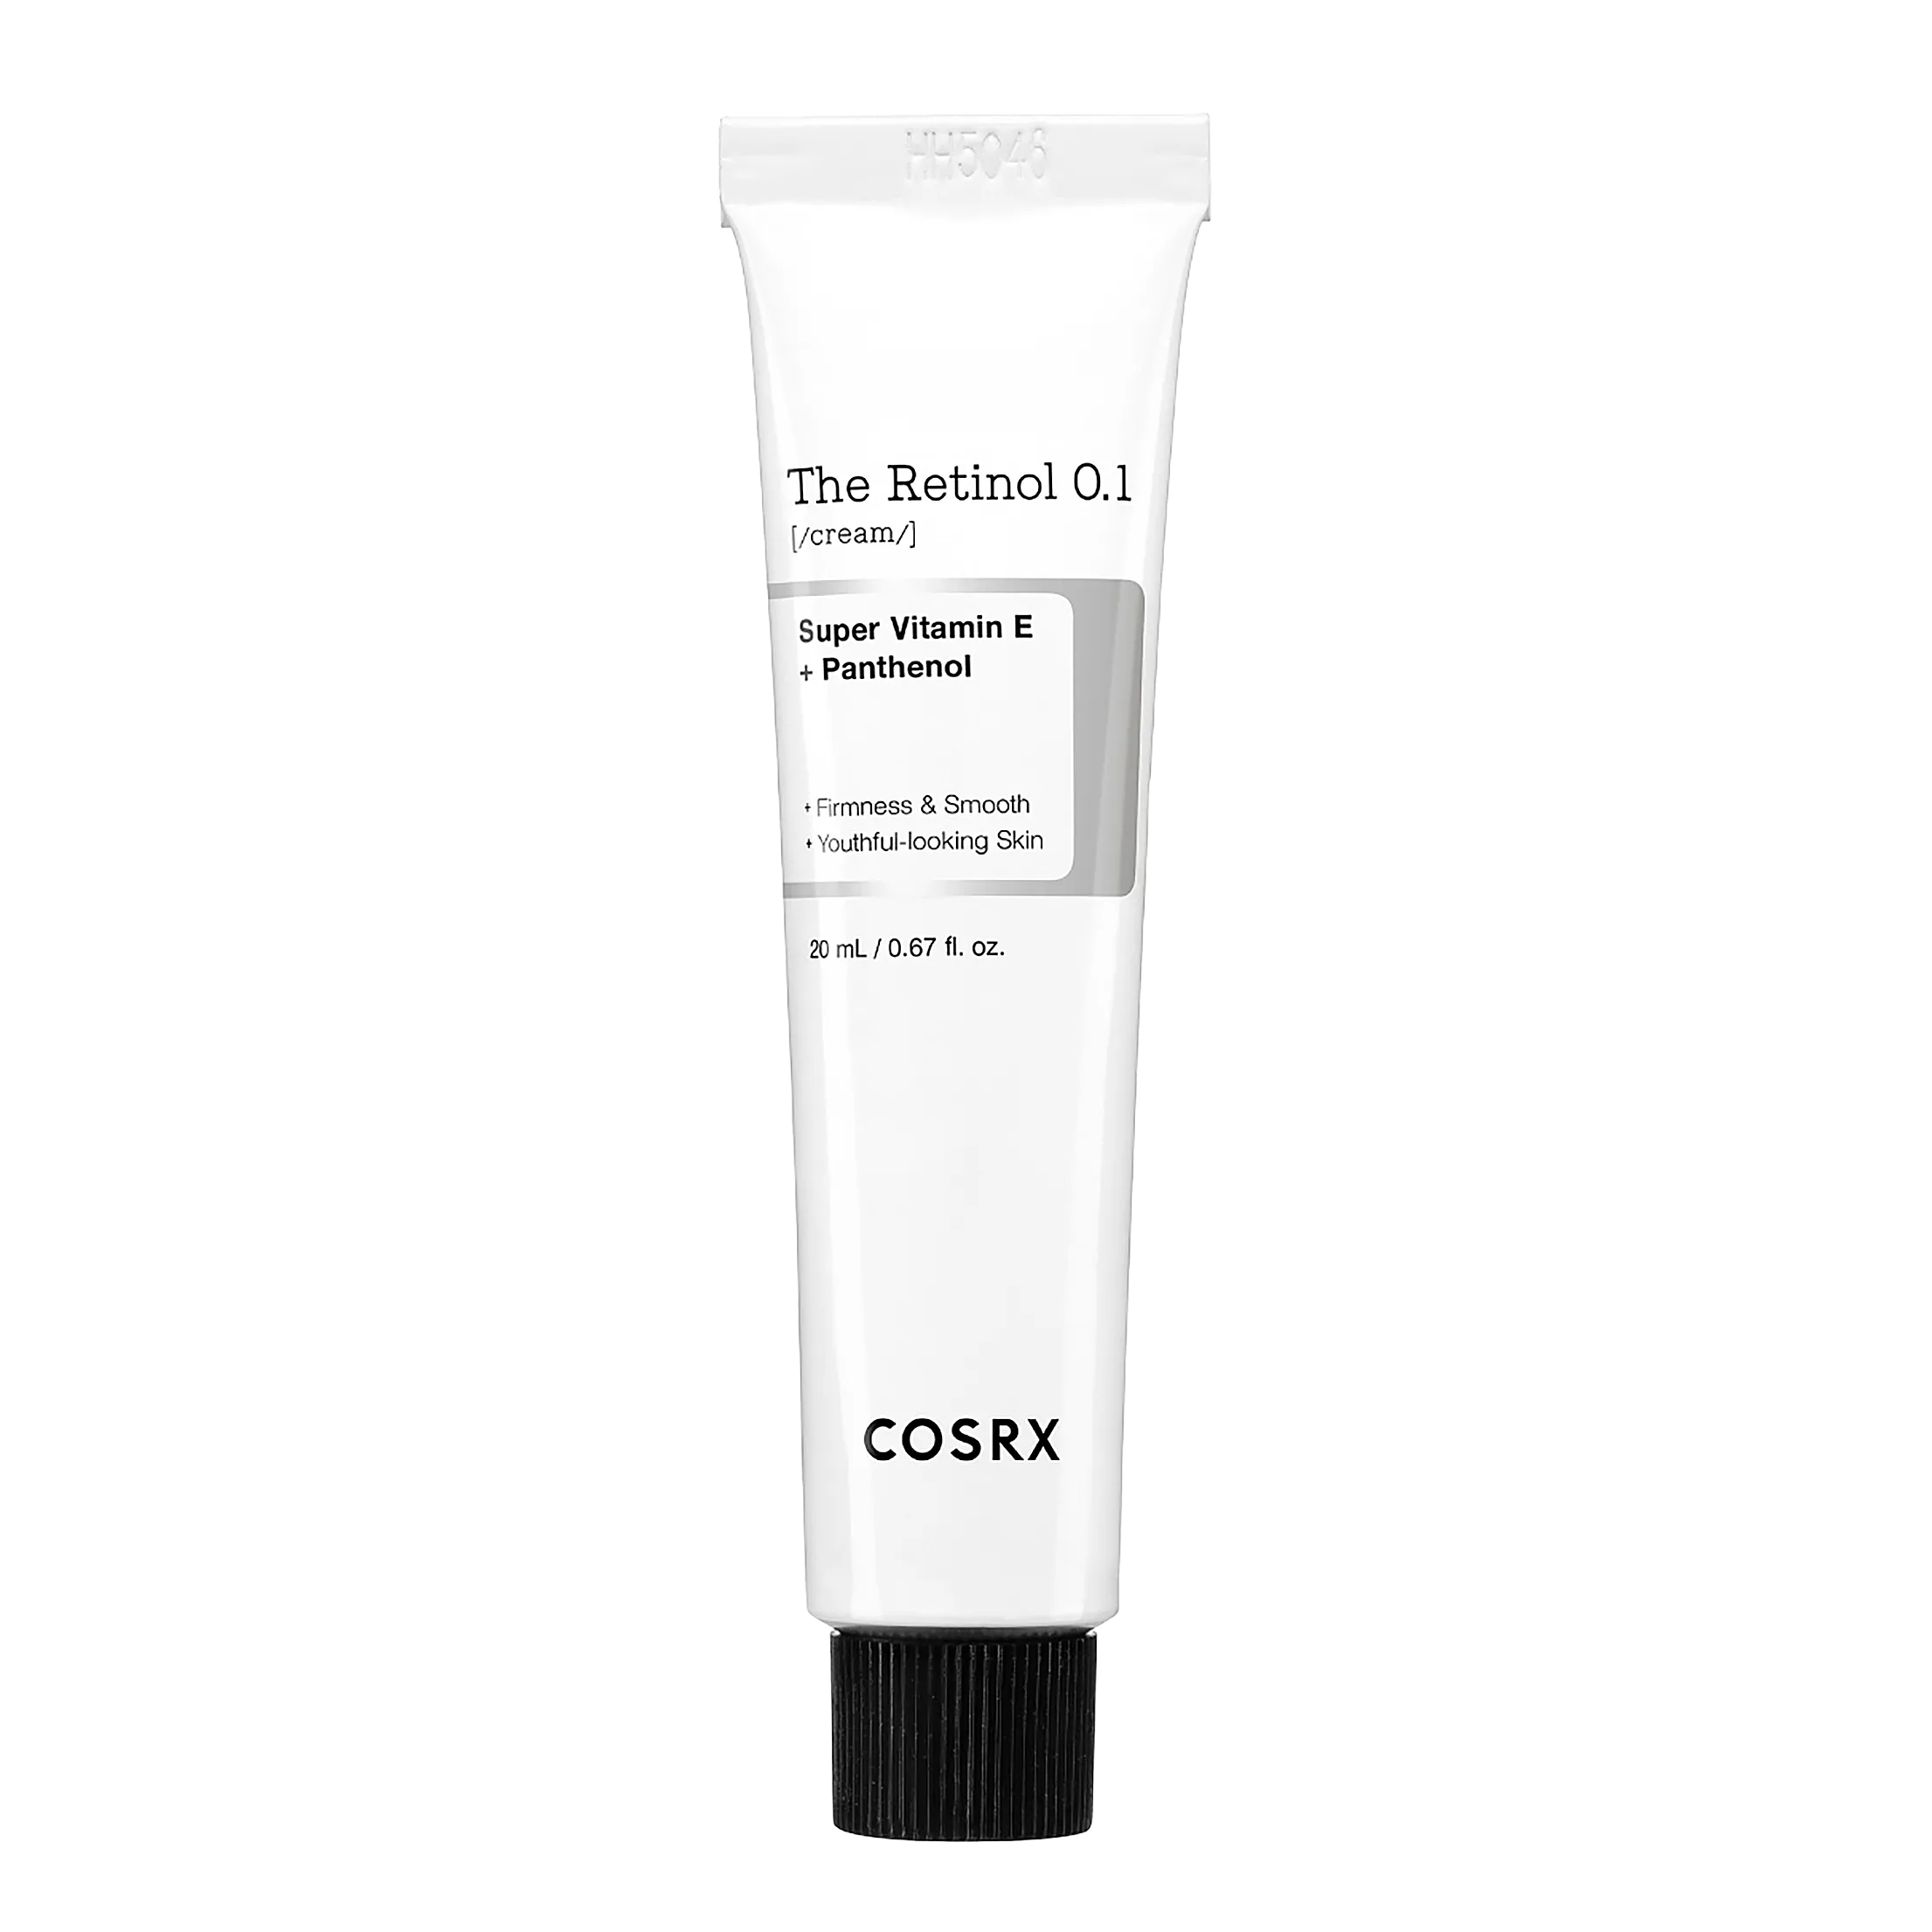 COSRX The Retinol 0.1 Cream 